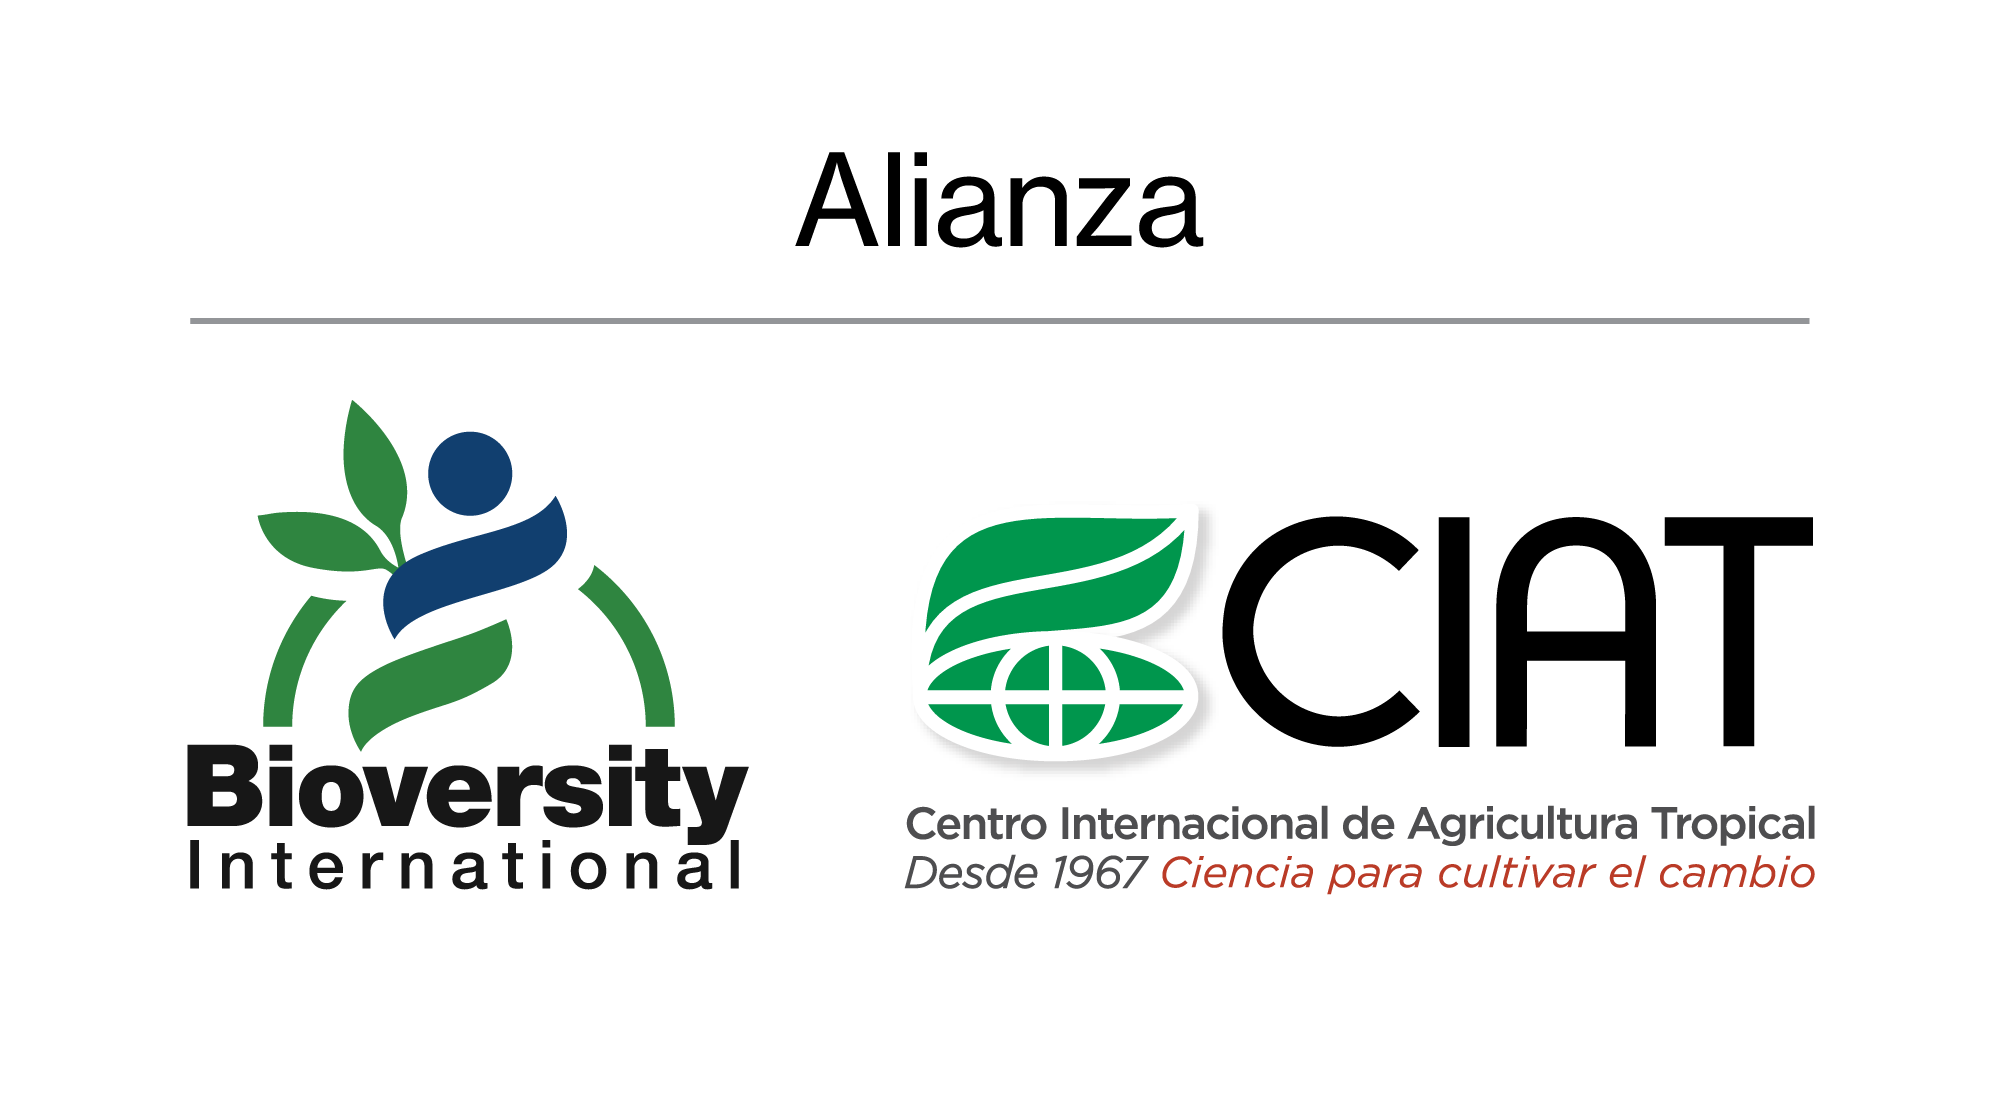 Alianza Internacional Bioversity - CIAT